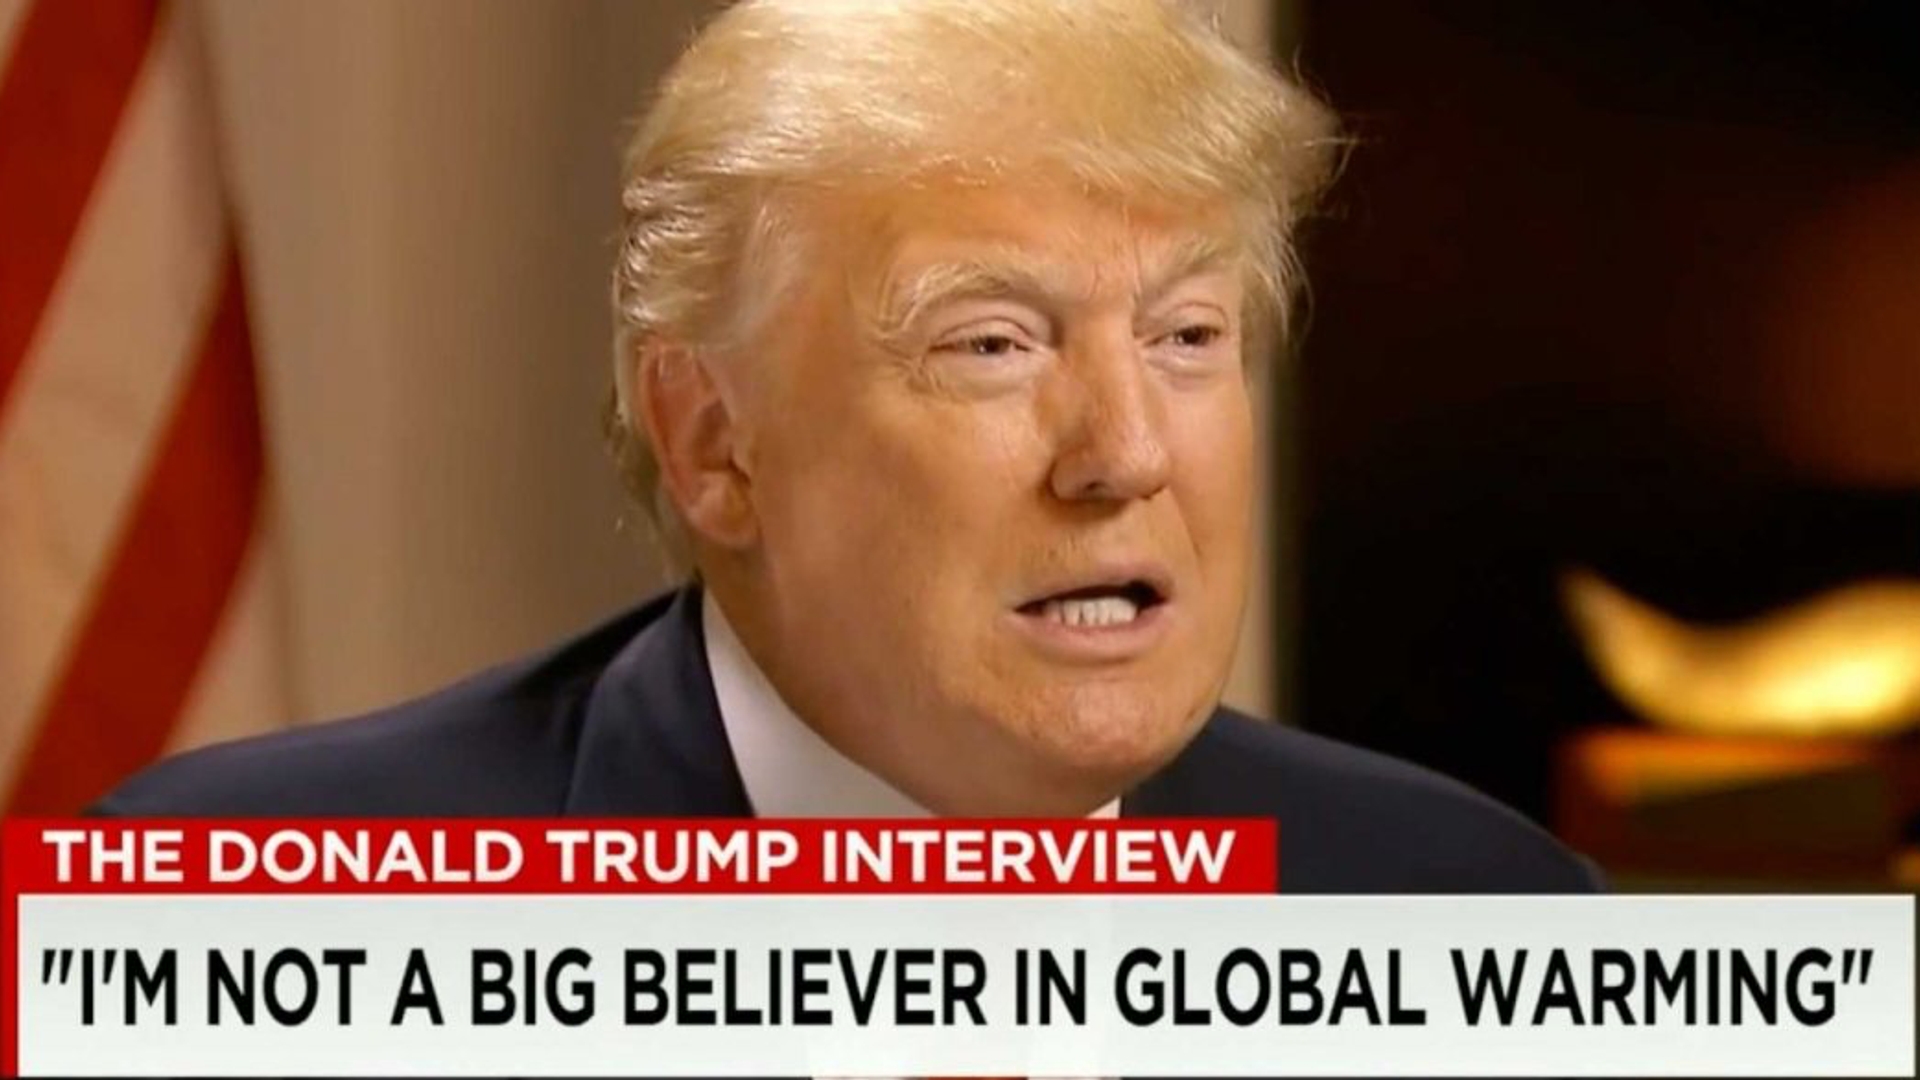 Donald Trump not a big believer